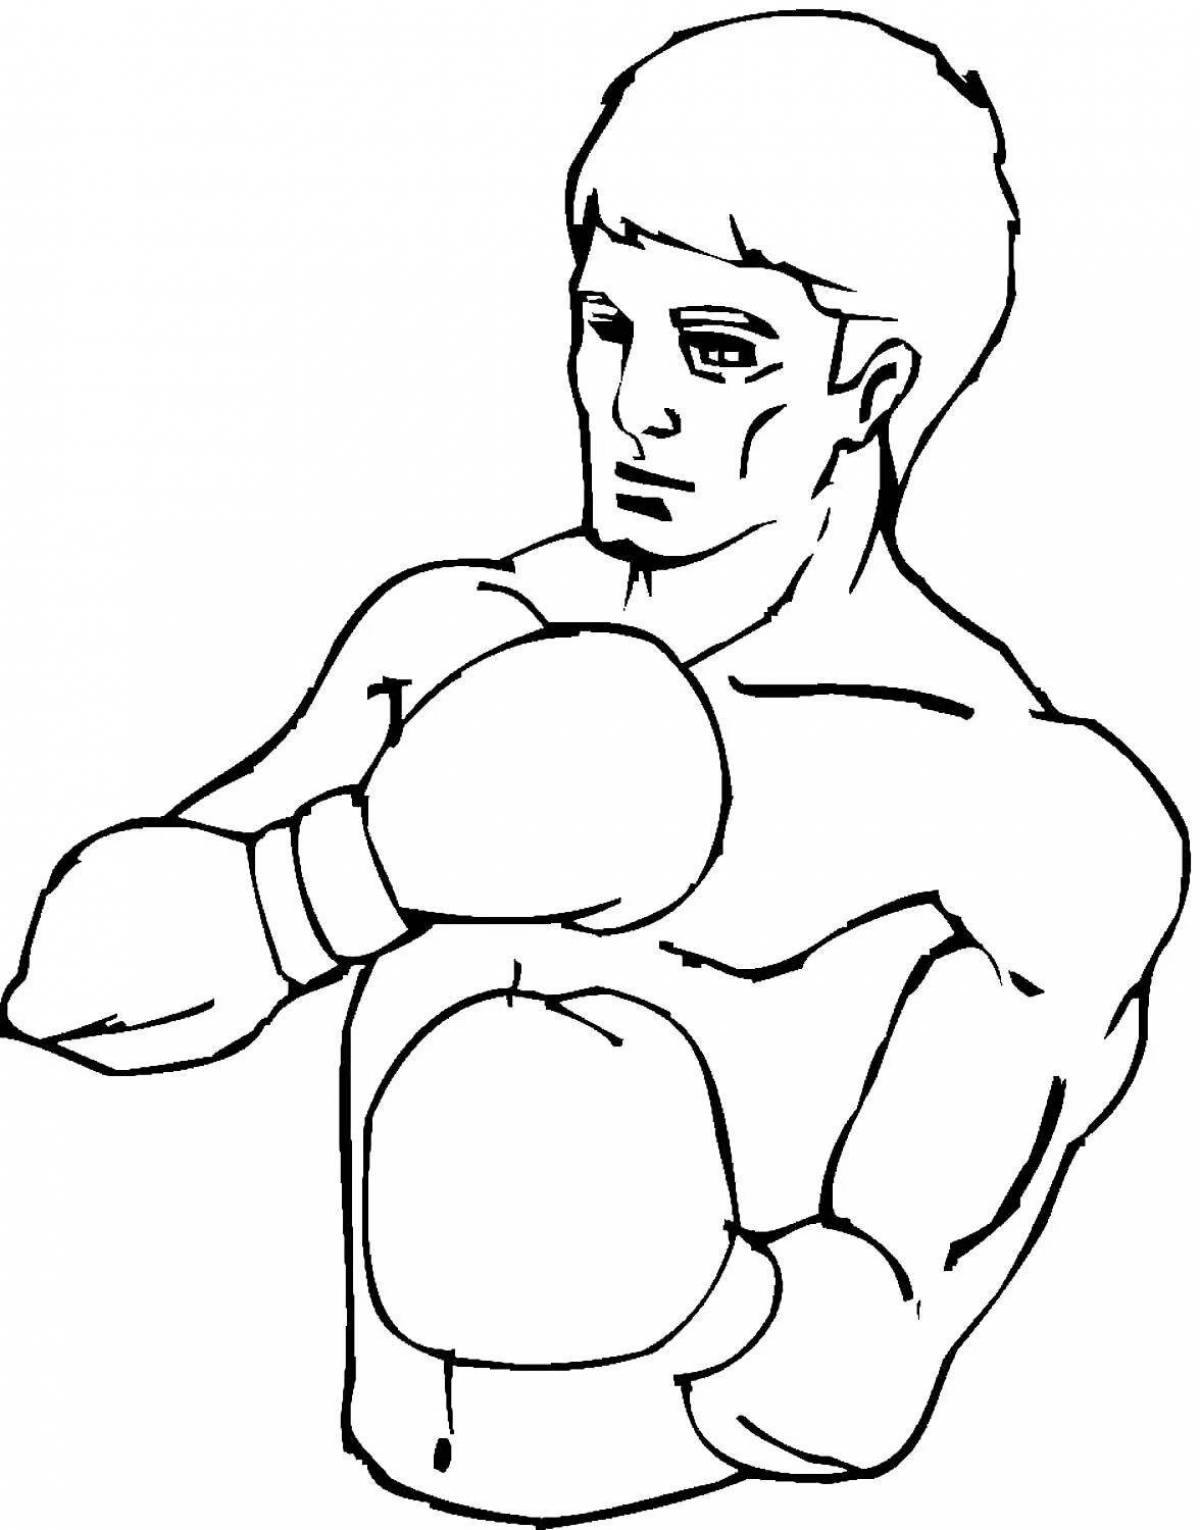 Impressive boxer coloring page